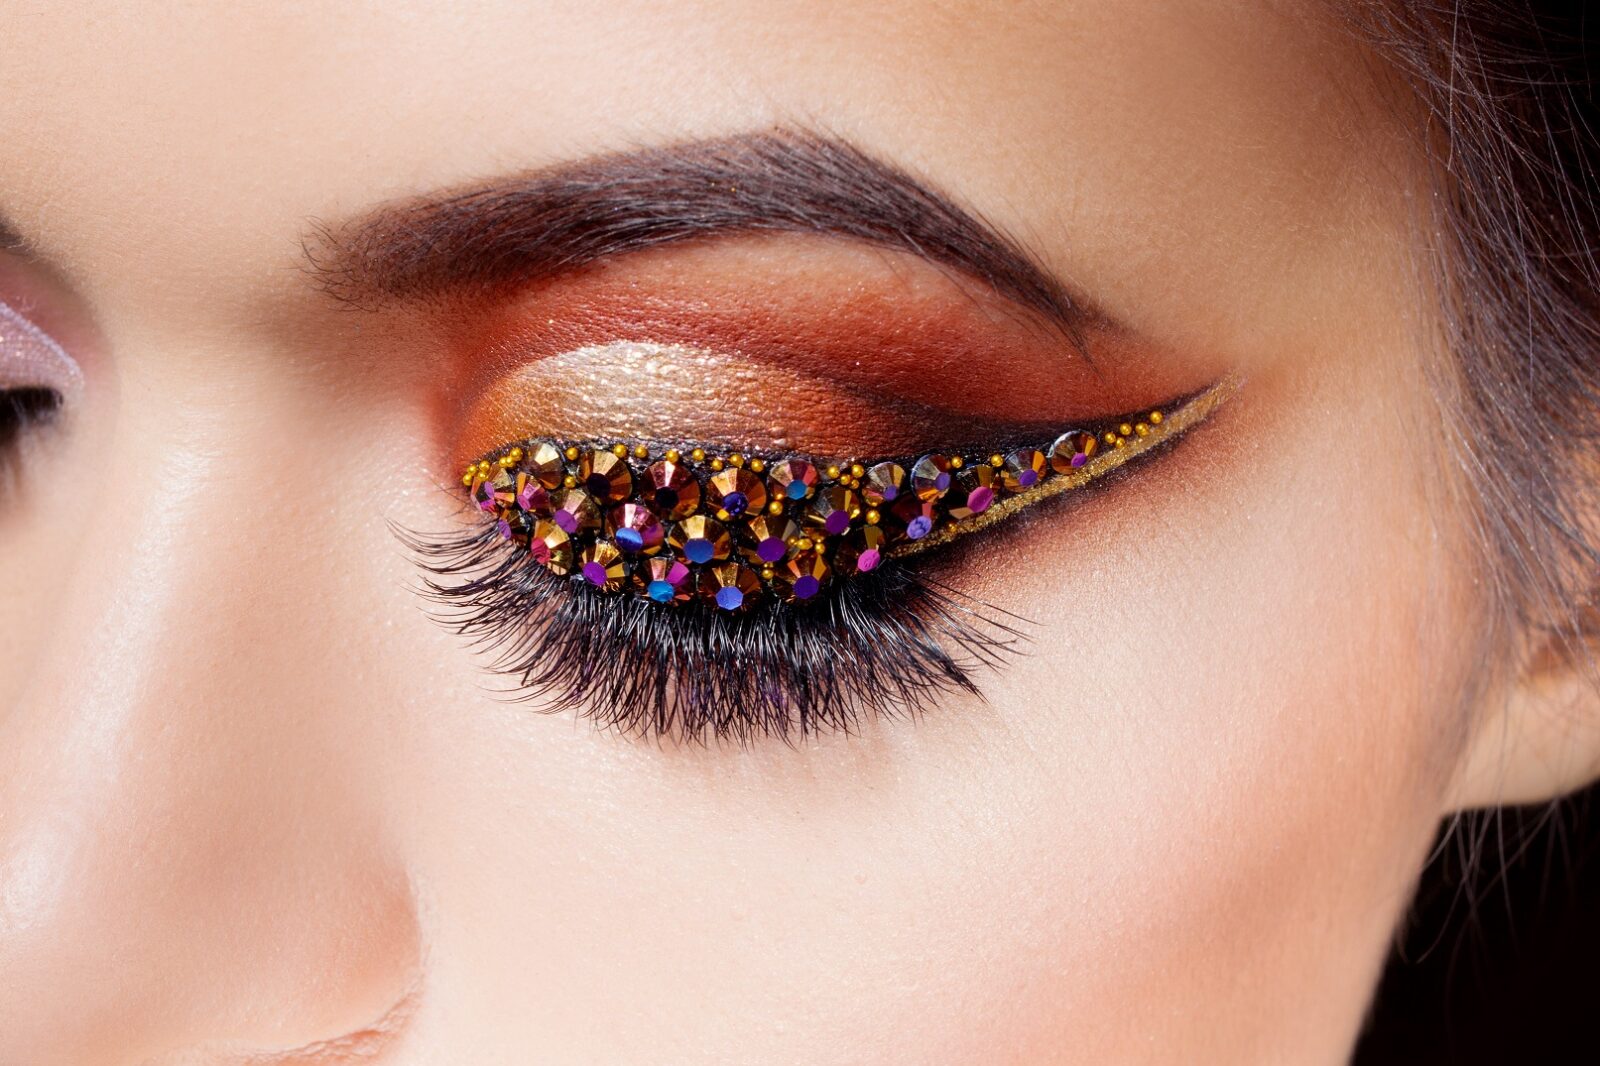 Makeup trends in 2022 in-post image 3, eye makeup embellishments